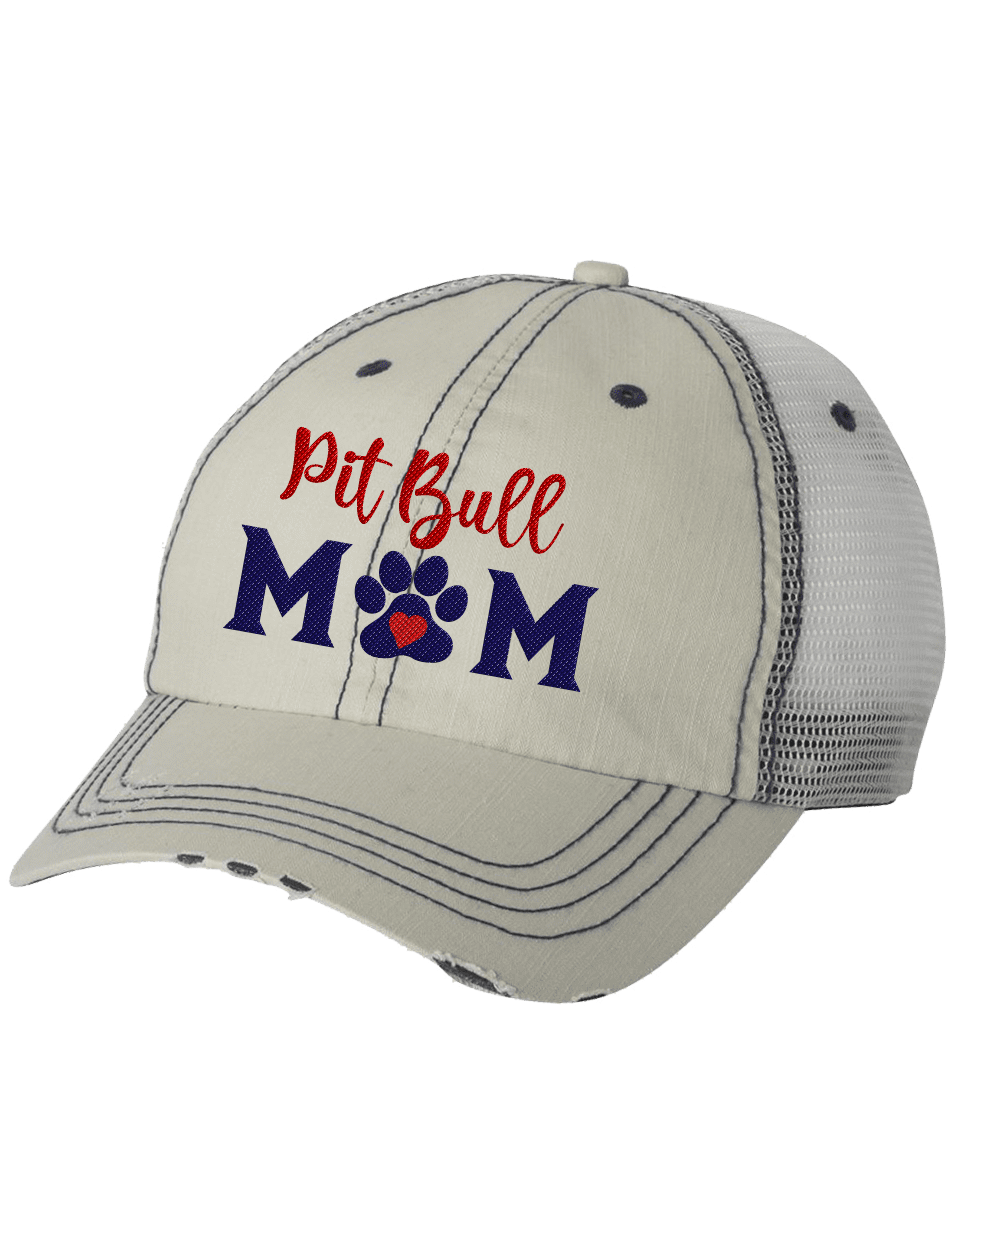 Pitbull Mom Logo Classic Flat-Brimmed Trucker Hat Baseball Cap Gray 